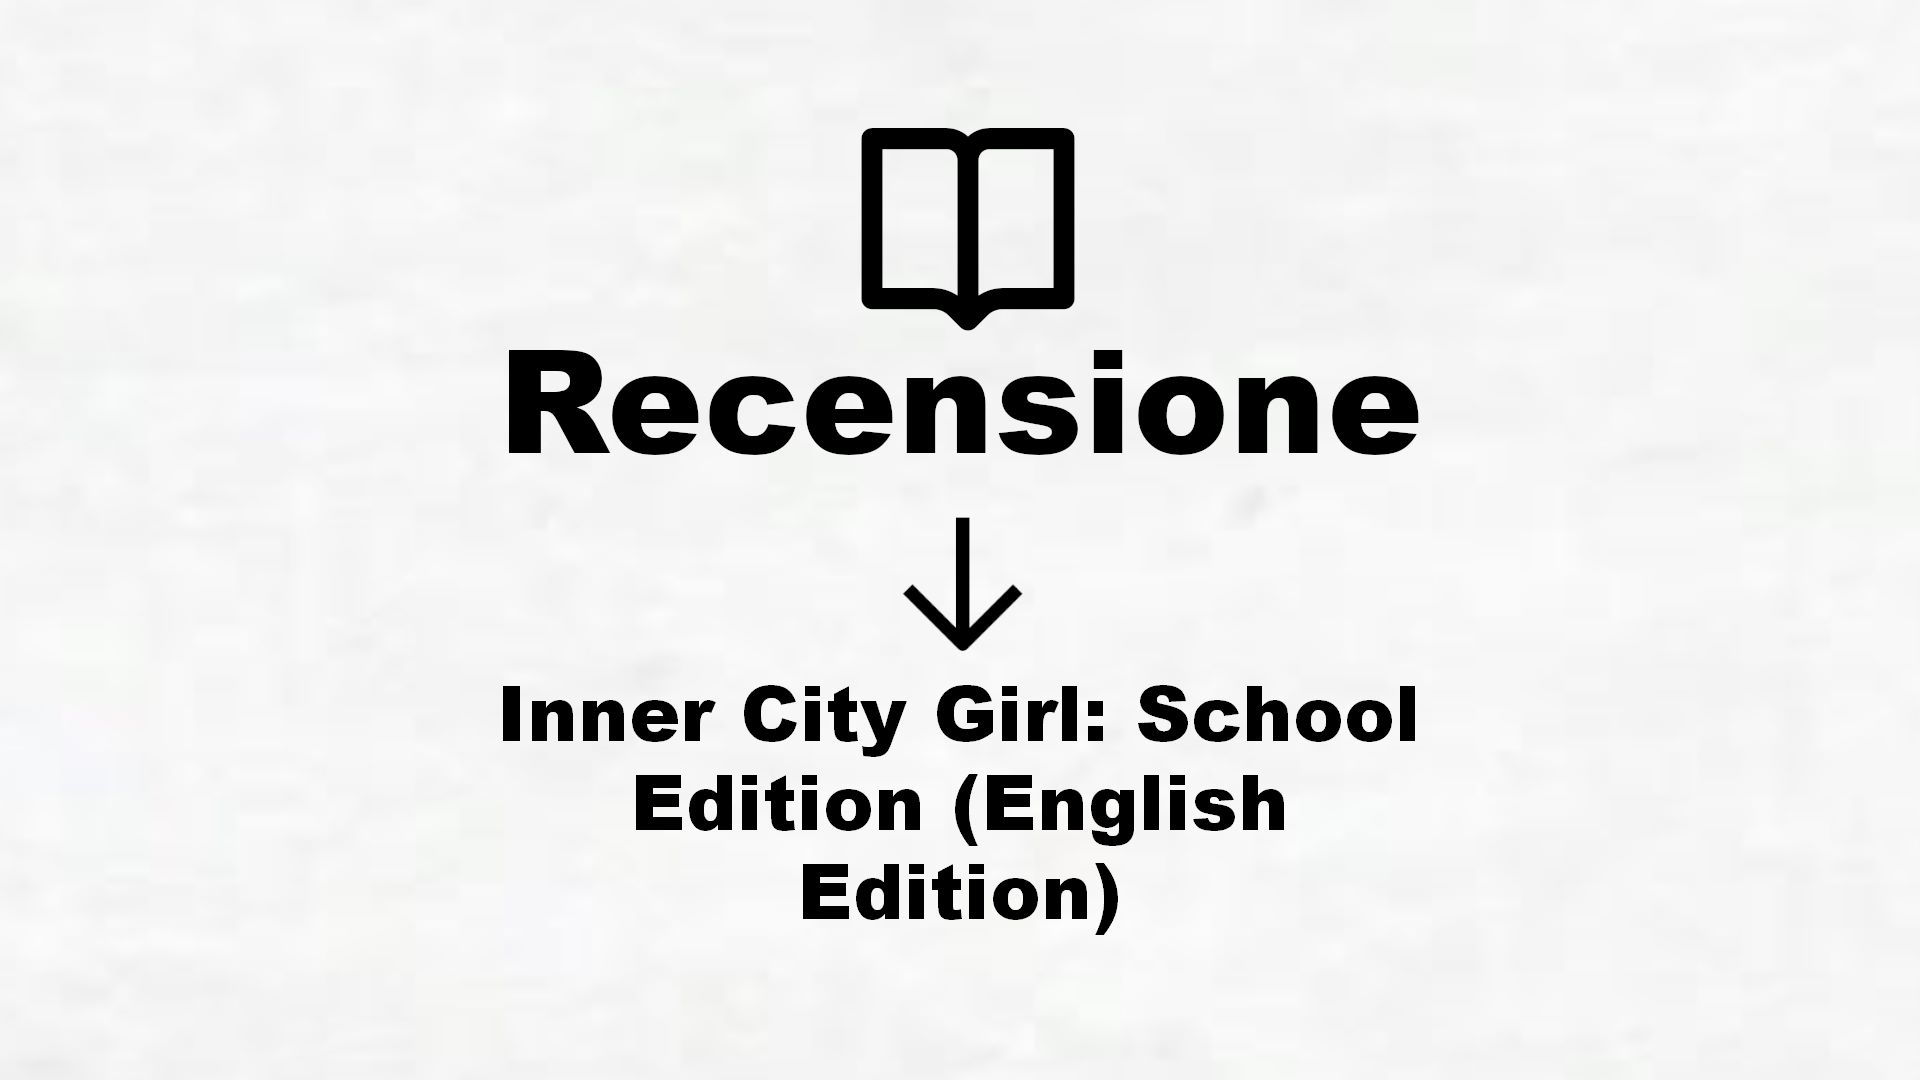 Inner City Girl: School Edition (English Edition) – Recensione Libro